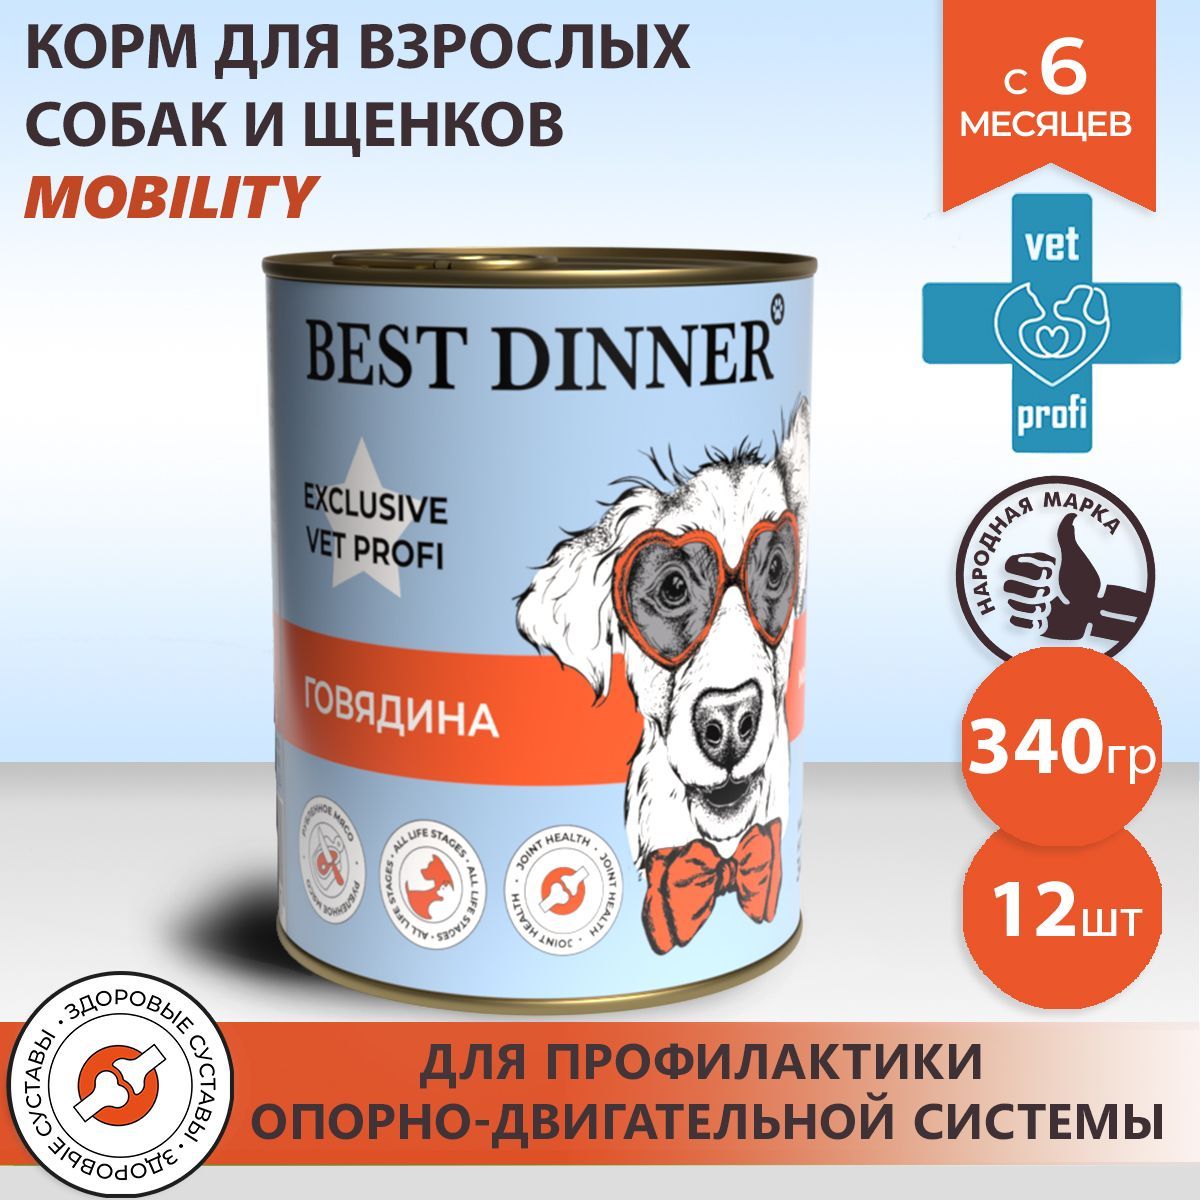 Профи фит корм для собак. Best dinner Mobility говядина. Best dinner Exclusive vet Profi Mobility "говядина" - 0,1 кг. Корм бест для собак отзывы